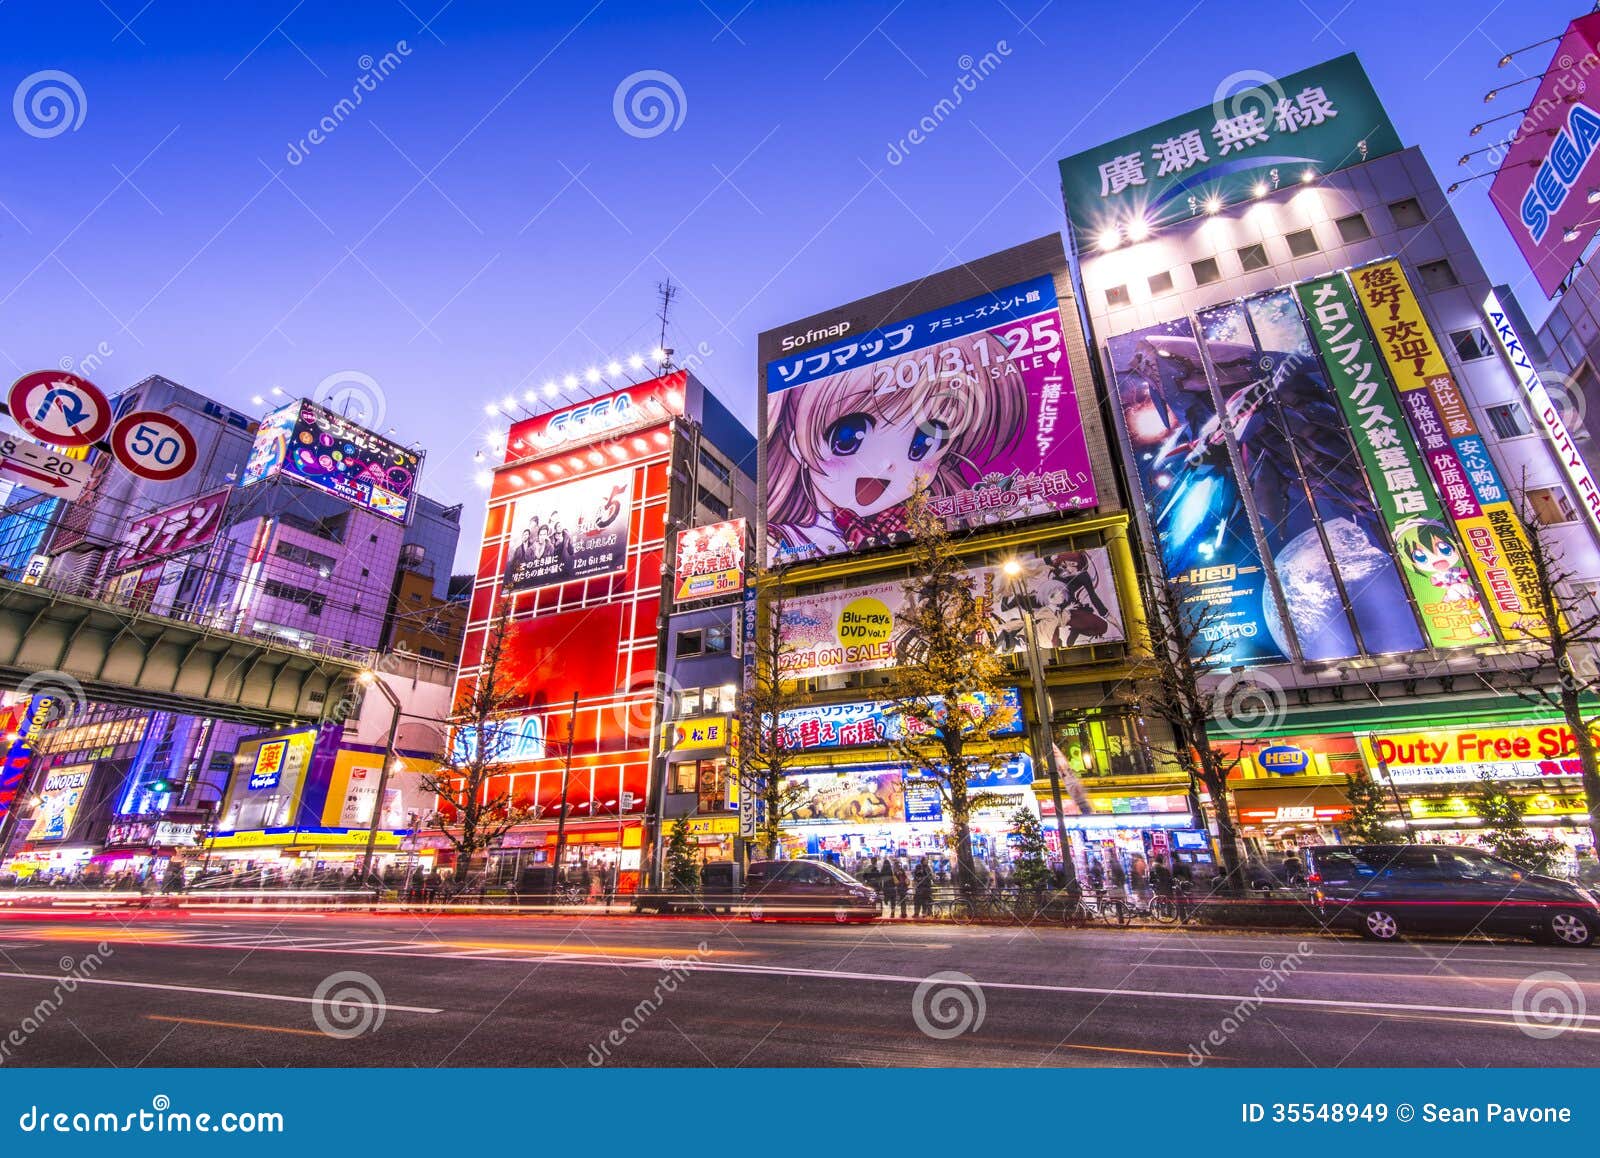 akihabara-tokyo-january-district-january-tokyo-jp-district-major-shopping-area-electronic-computer-anime-games-35548949.jpg